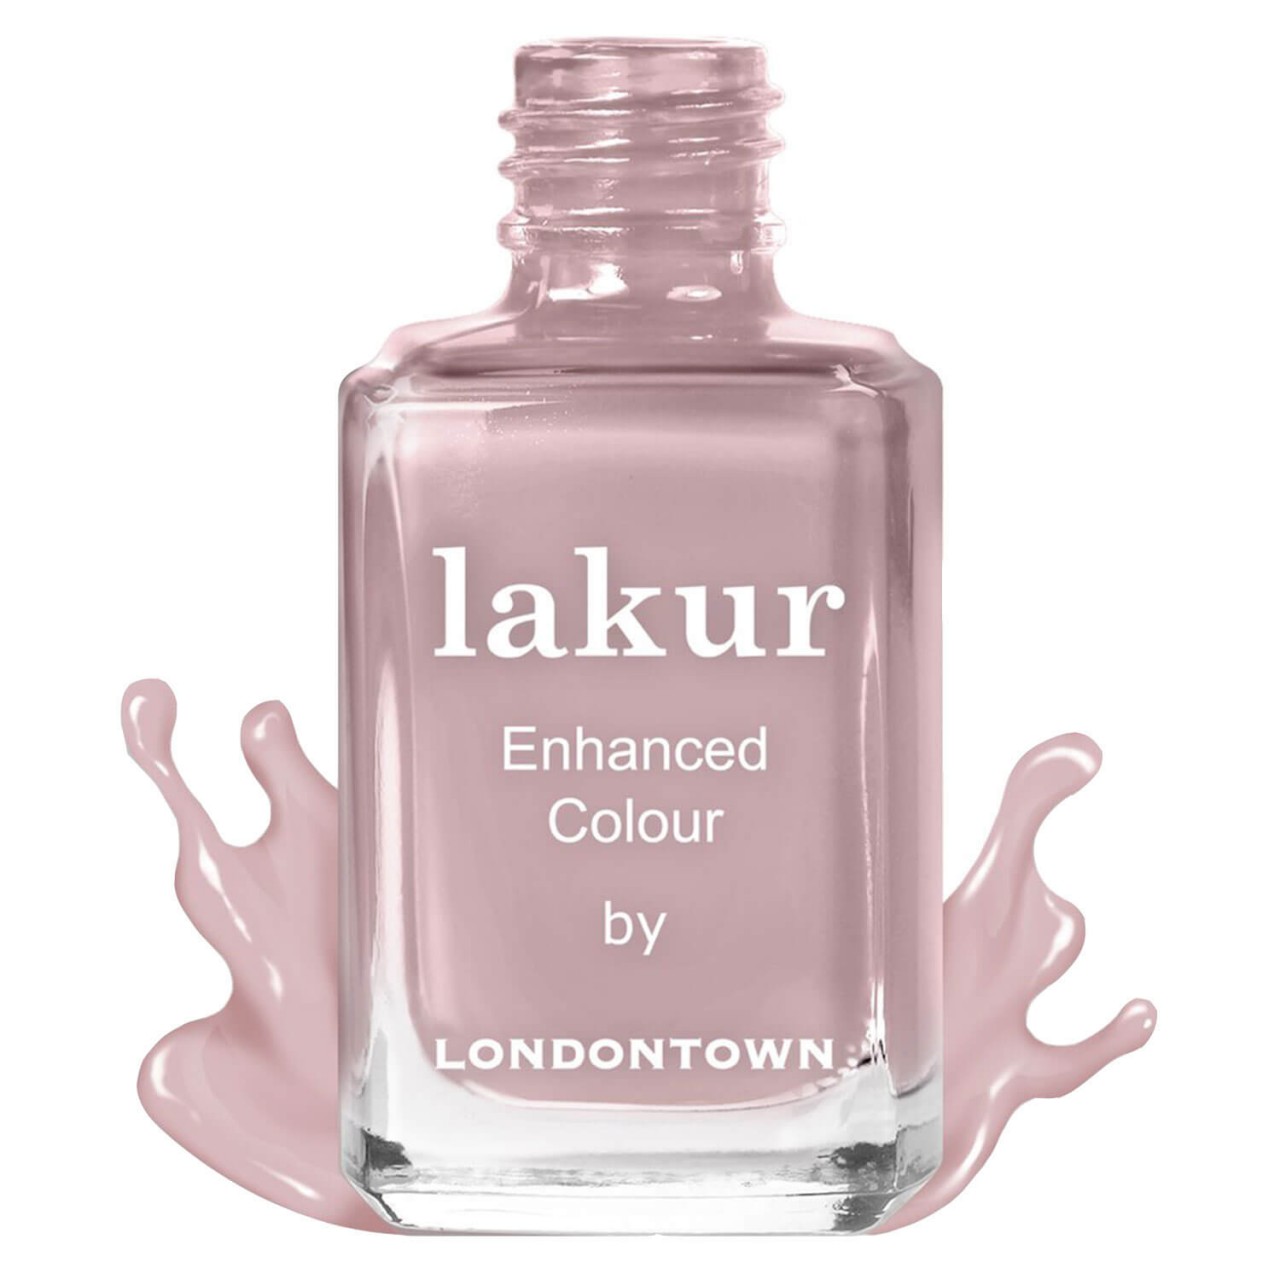 lakur - Crowning Crumpet von Londontown